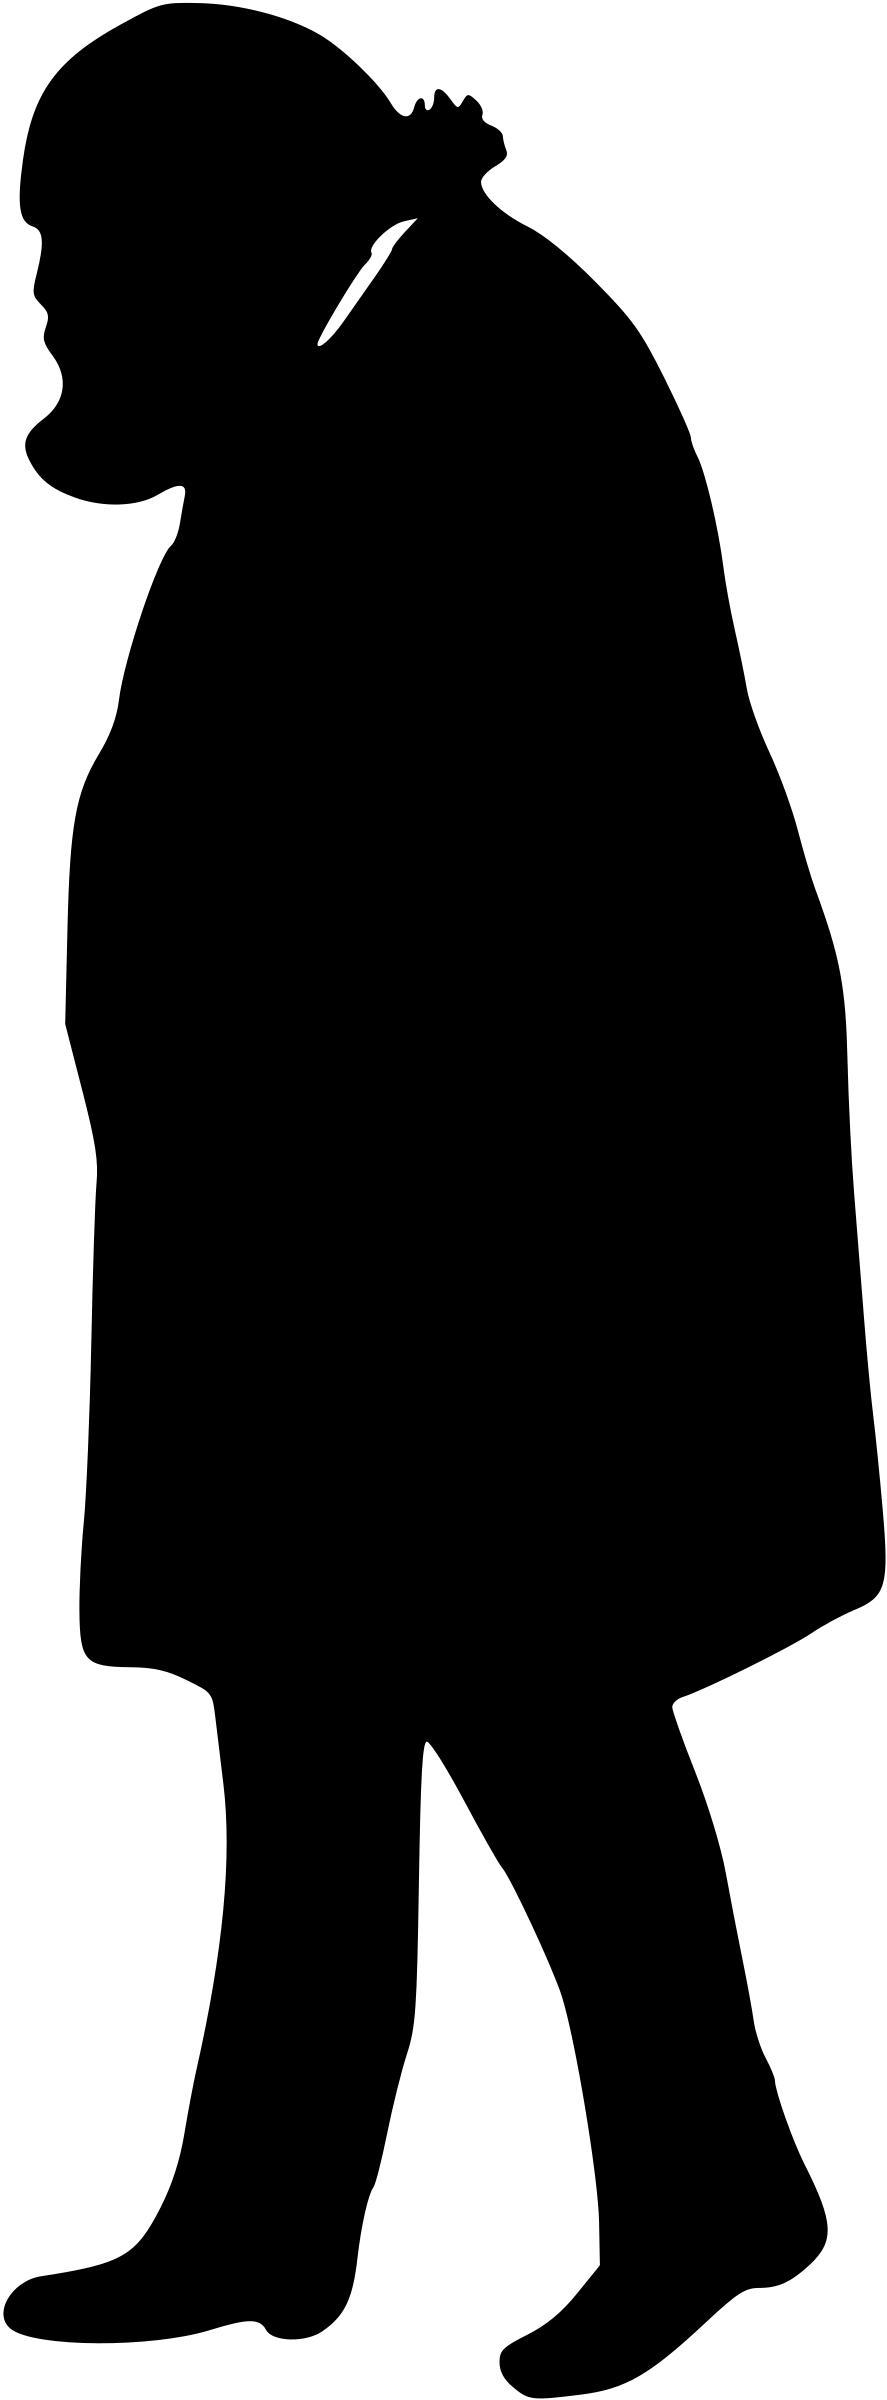 Gentleman silhouette 1 png transparent